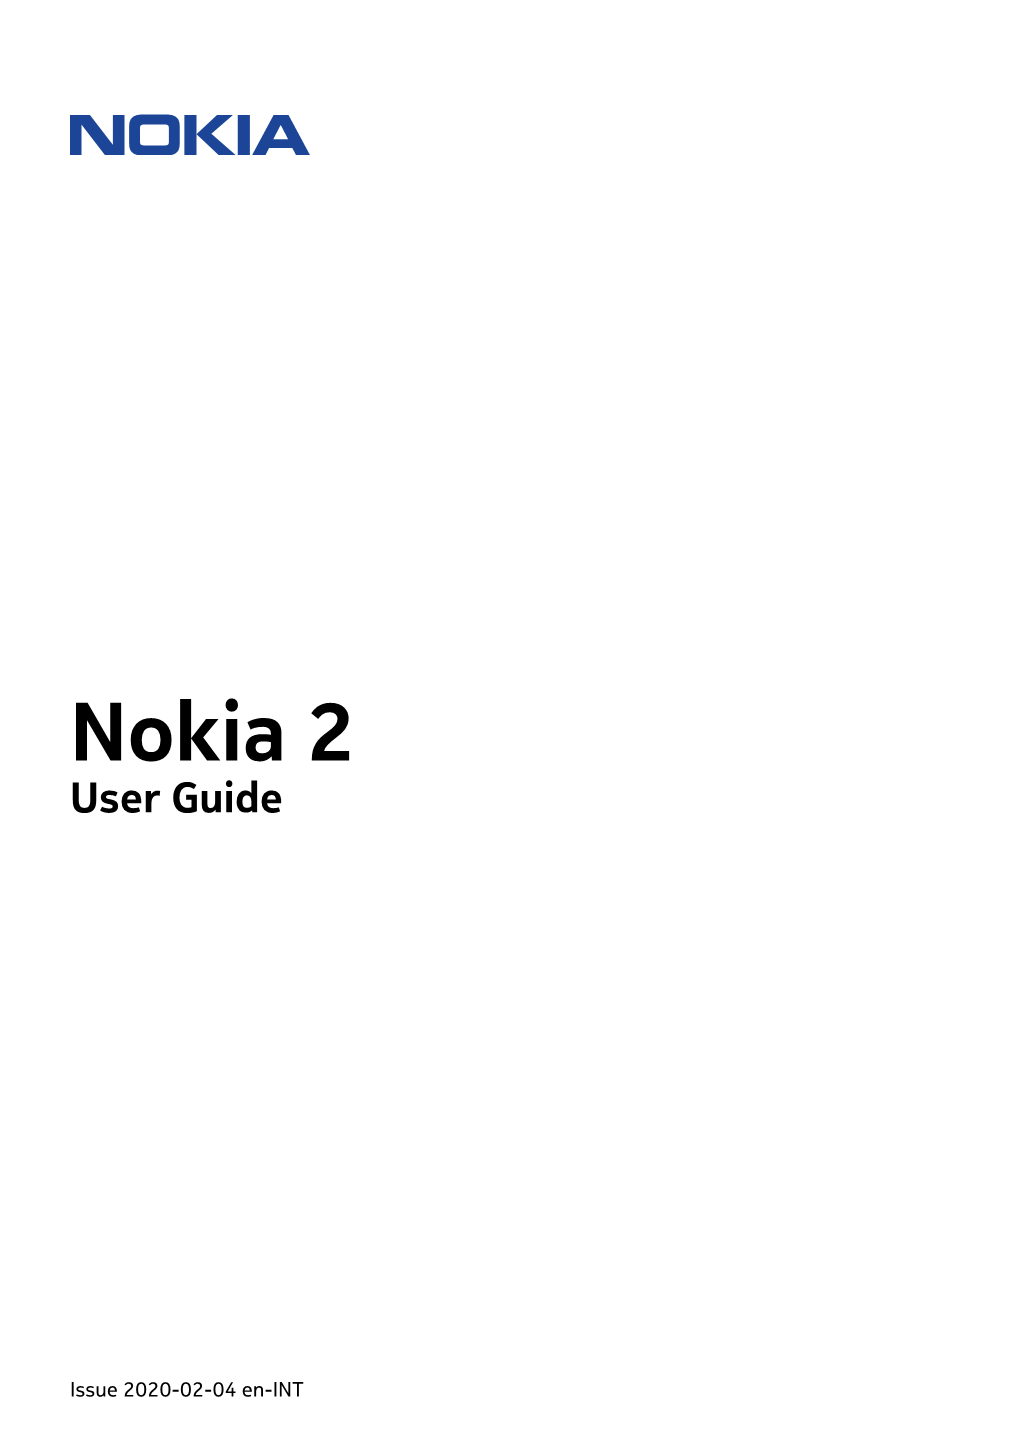 Nokia 2 User Guide Pdfdisplaydoctitle=True Pdflang=En